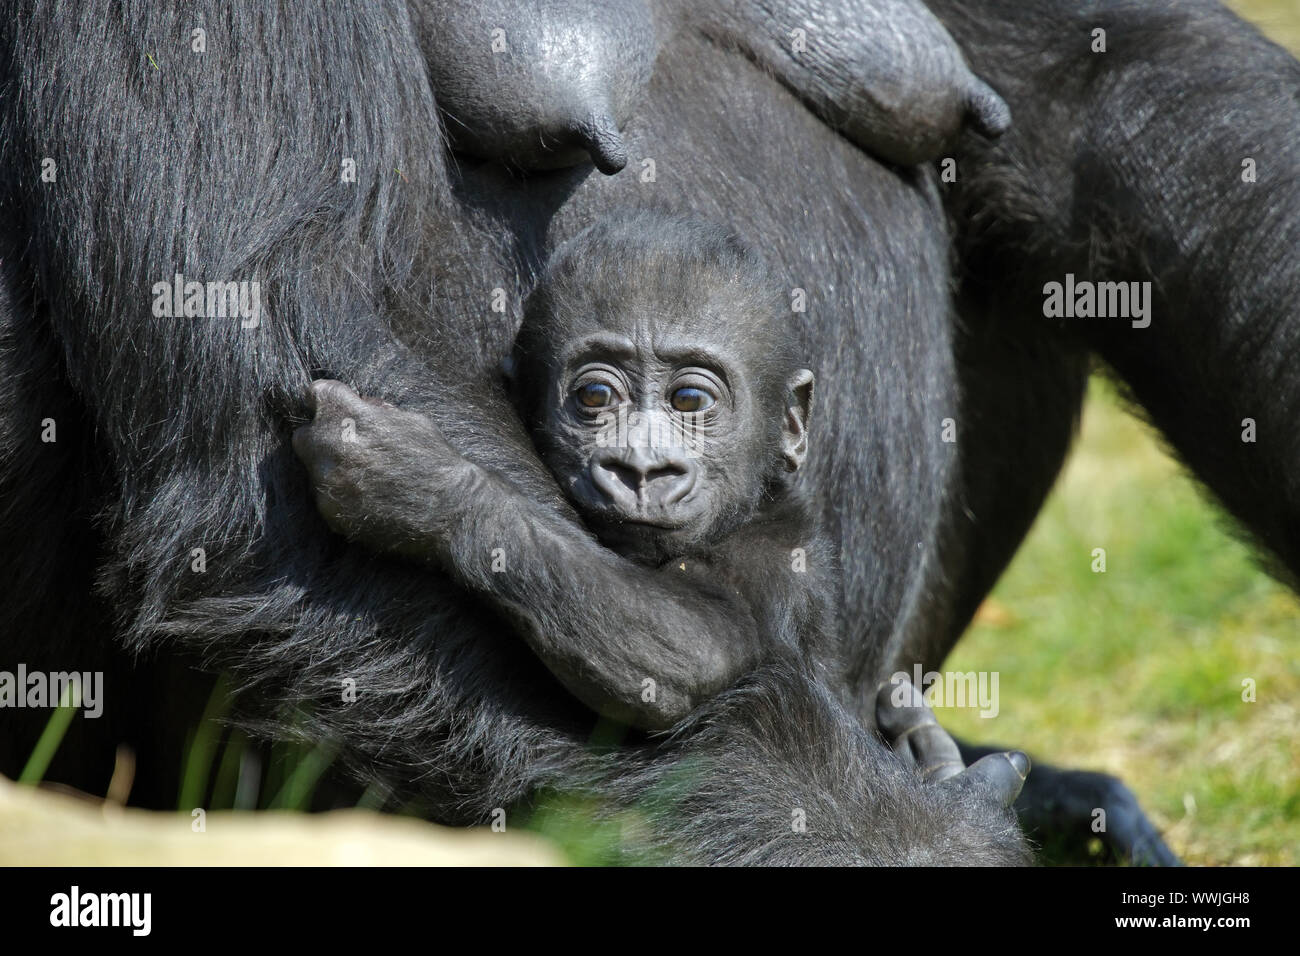 lowland gorilla Stock Photo